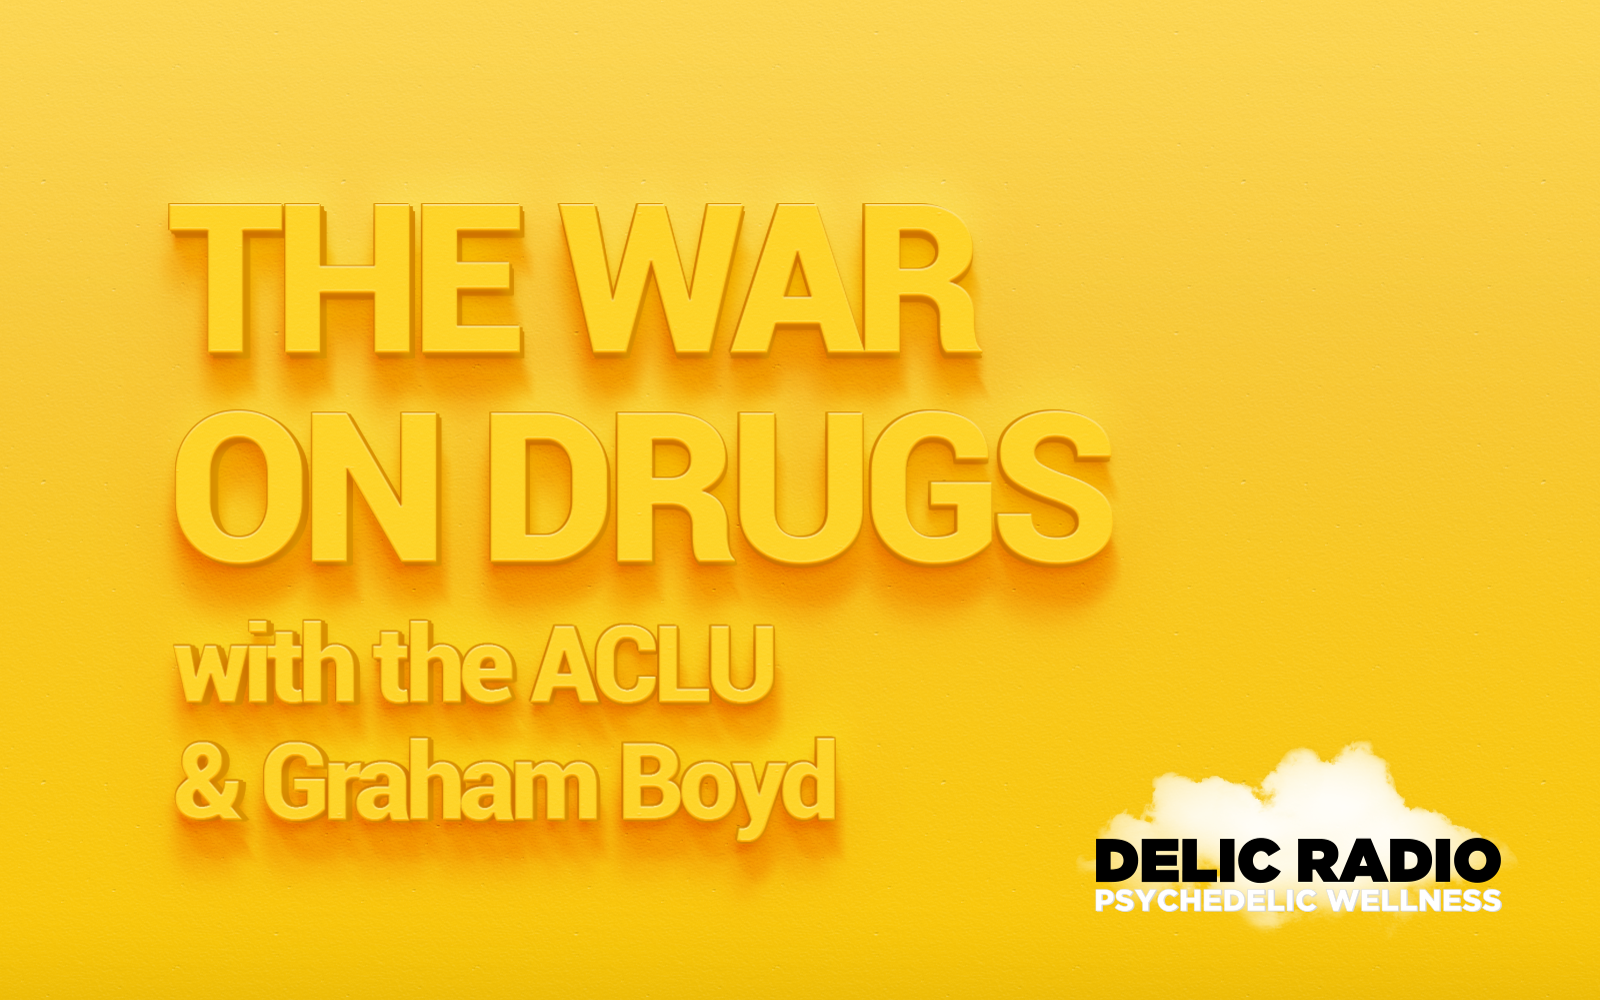 Delic Radio War on Drugs